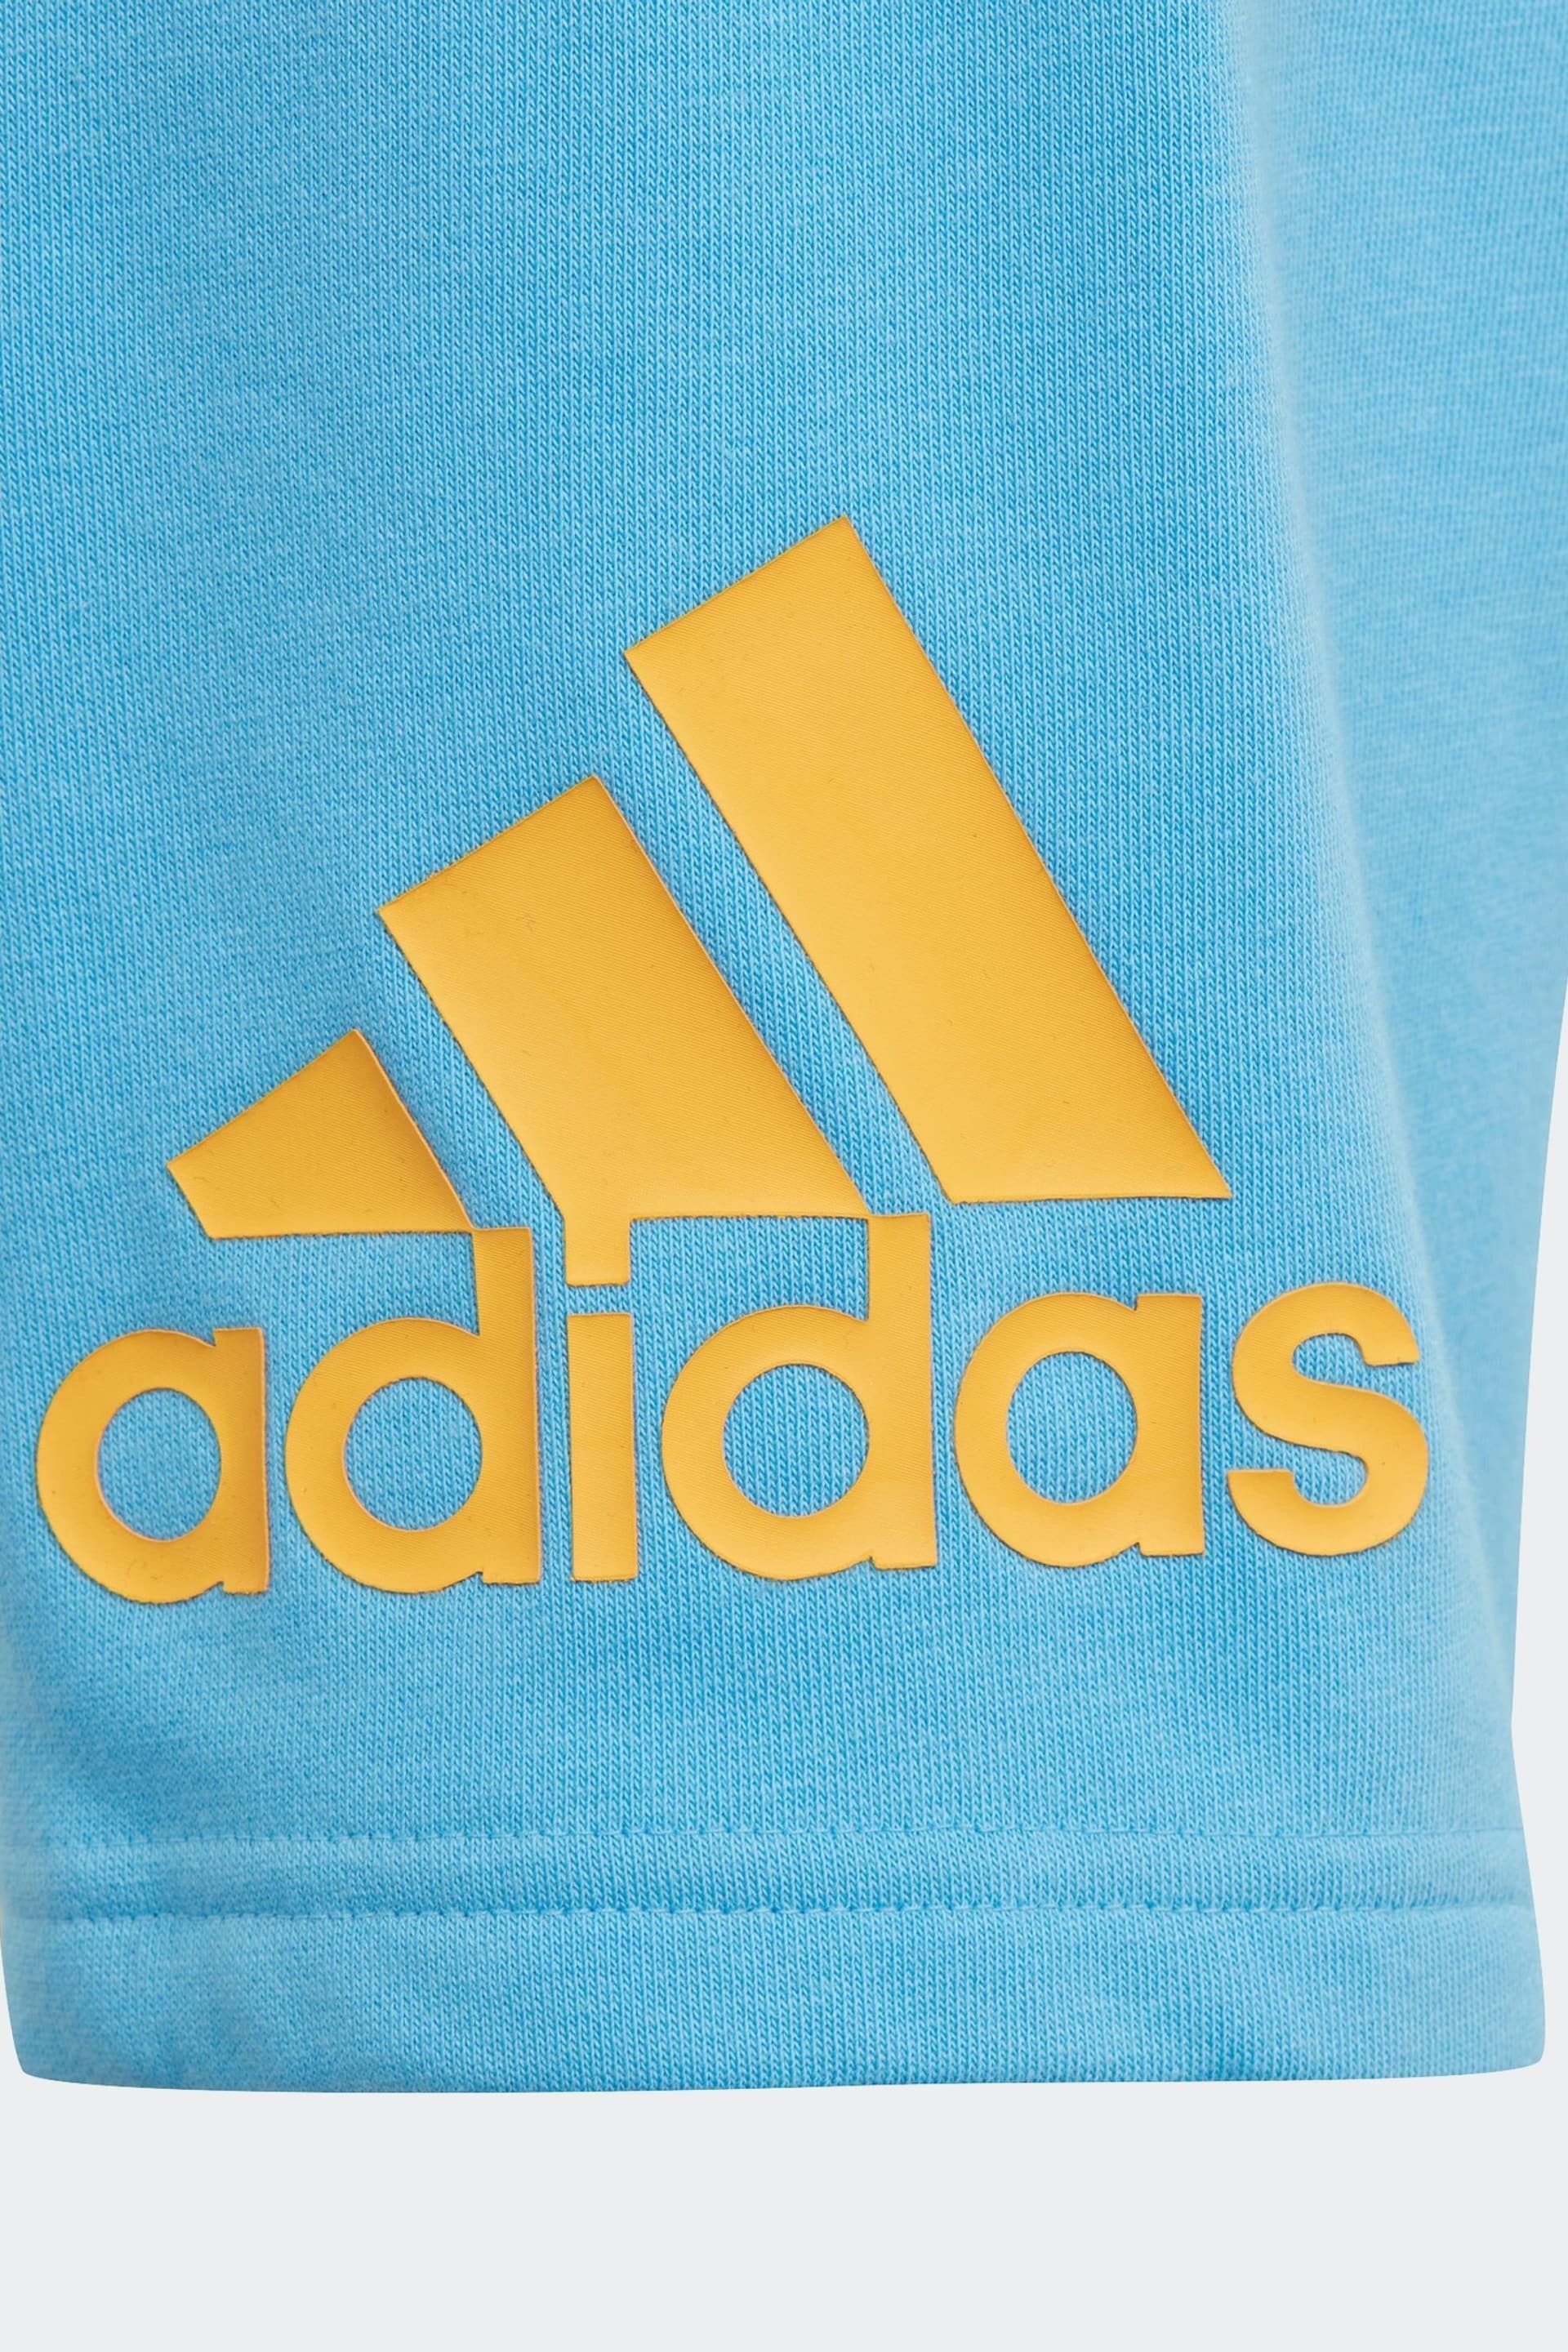 adidas Blue Sportswear T-Shirt and Shorts Set - Image 11 of 11